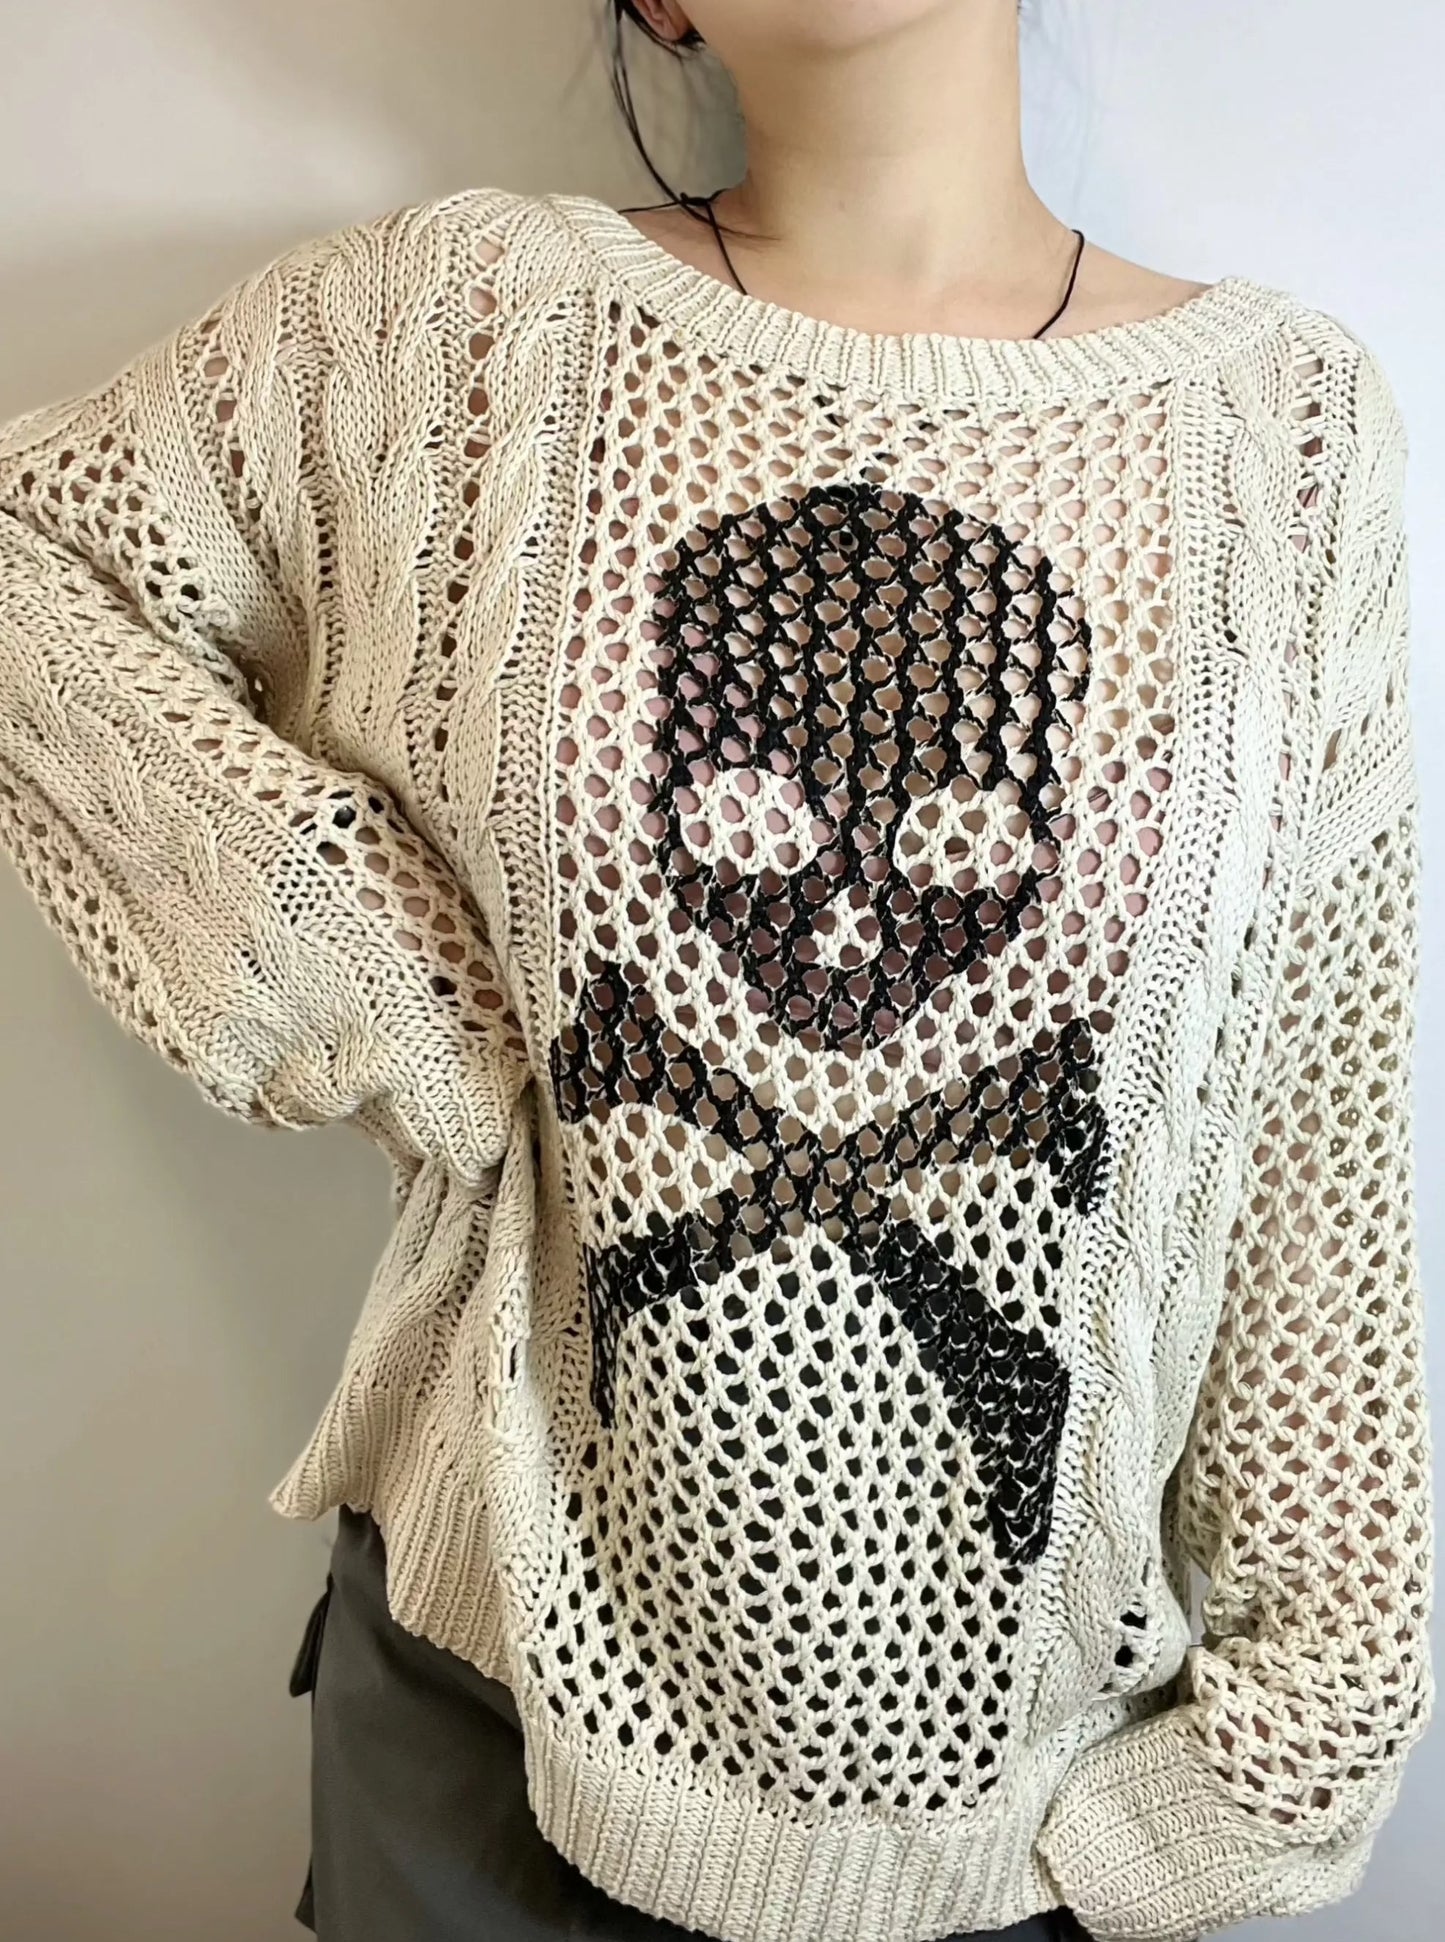 'White Chocolate' Grunge Skull Prints Knitted Sweater AlielNosirrah